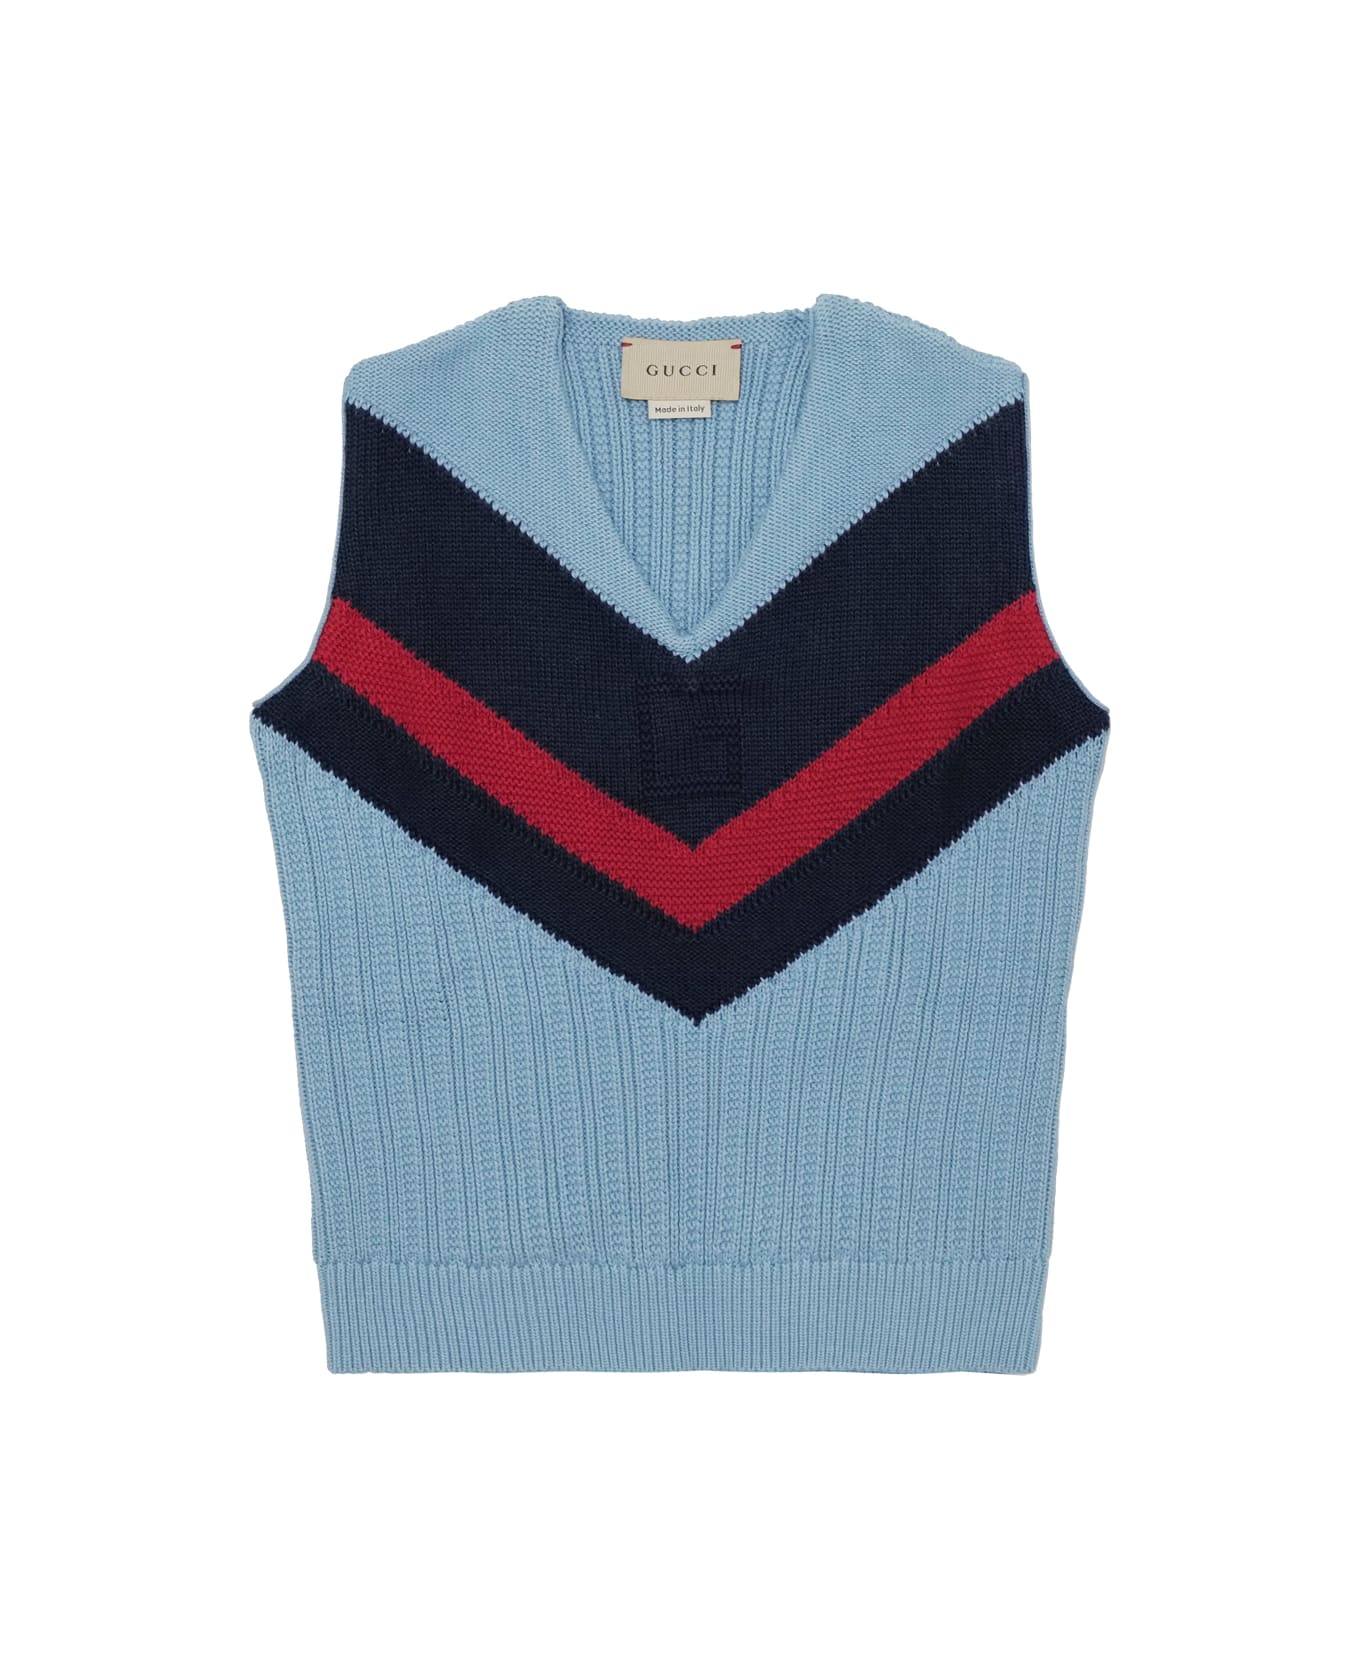 Gucci Knit Vest - Multicolor